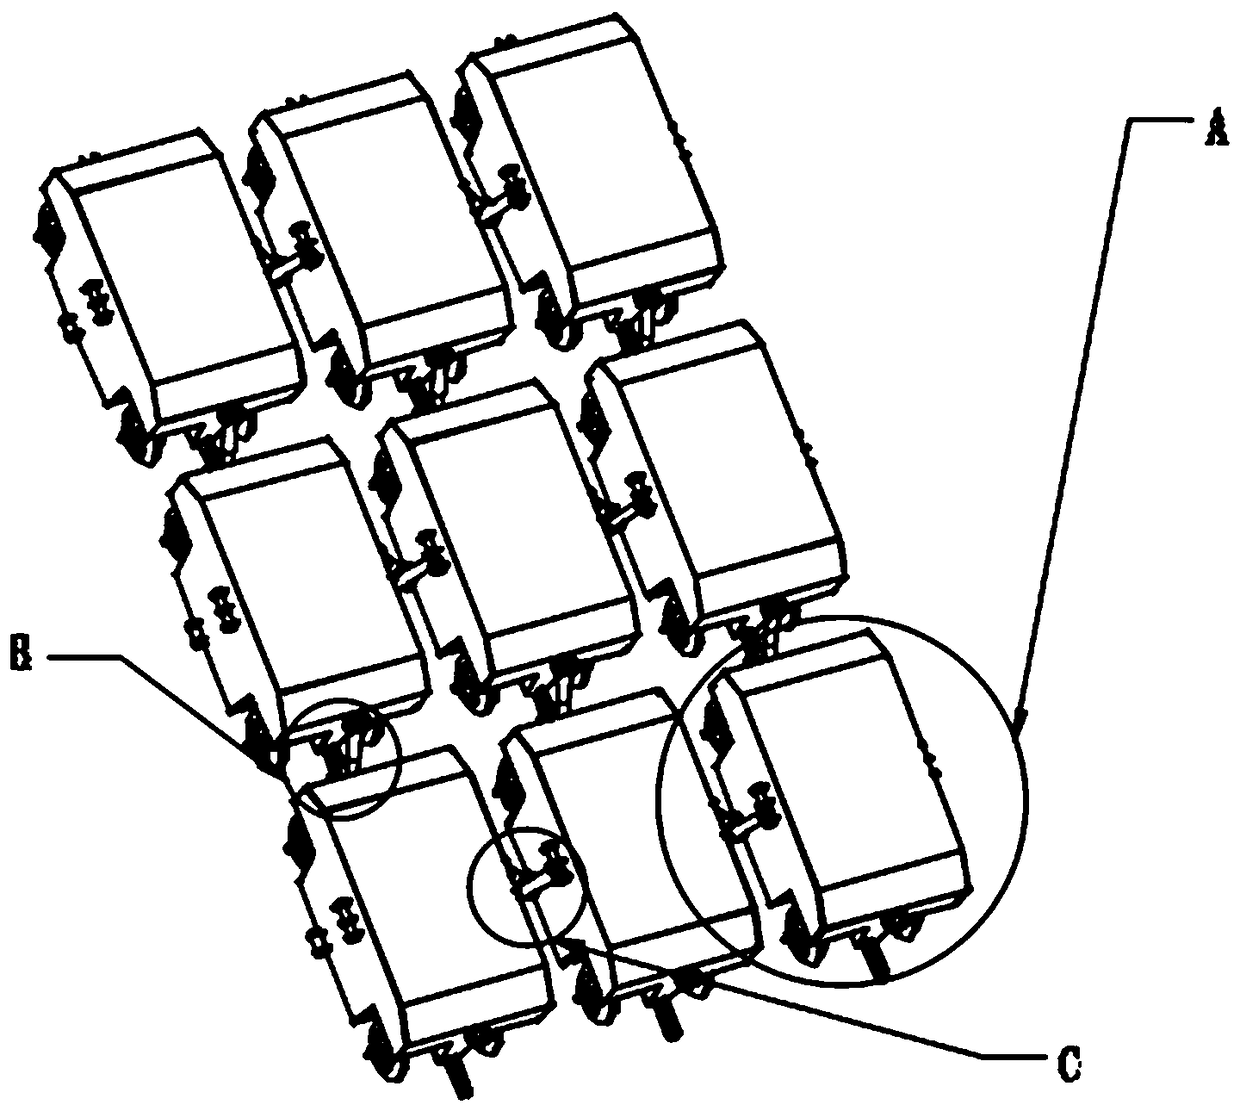 Modular combined robot platform